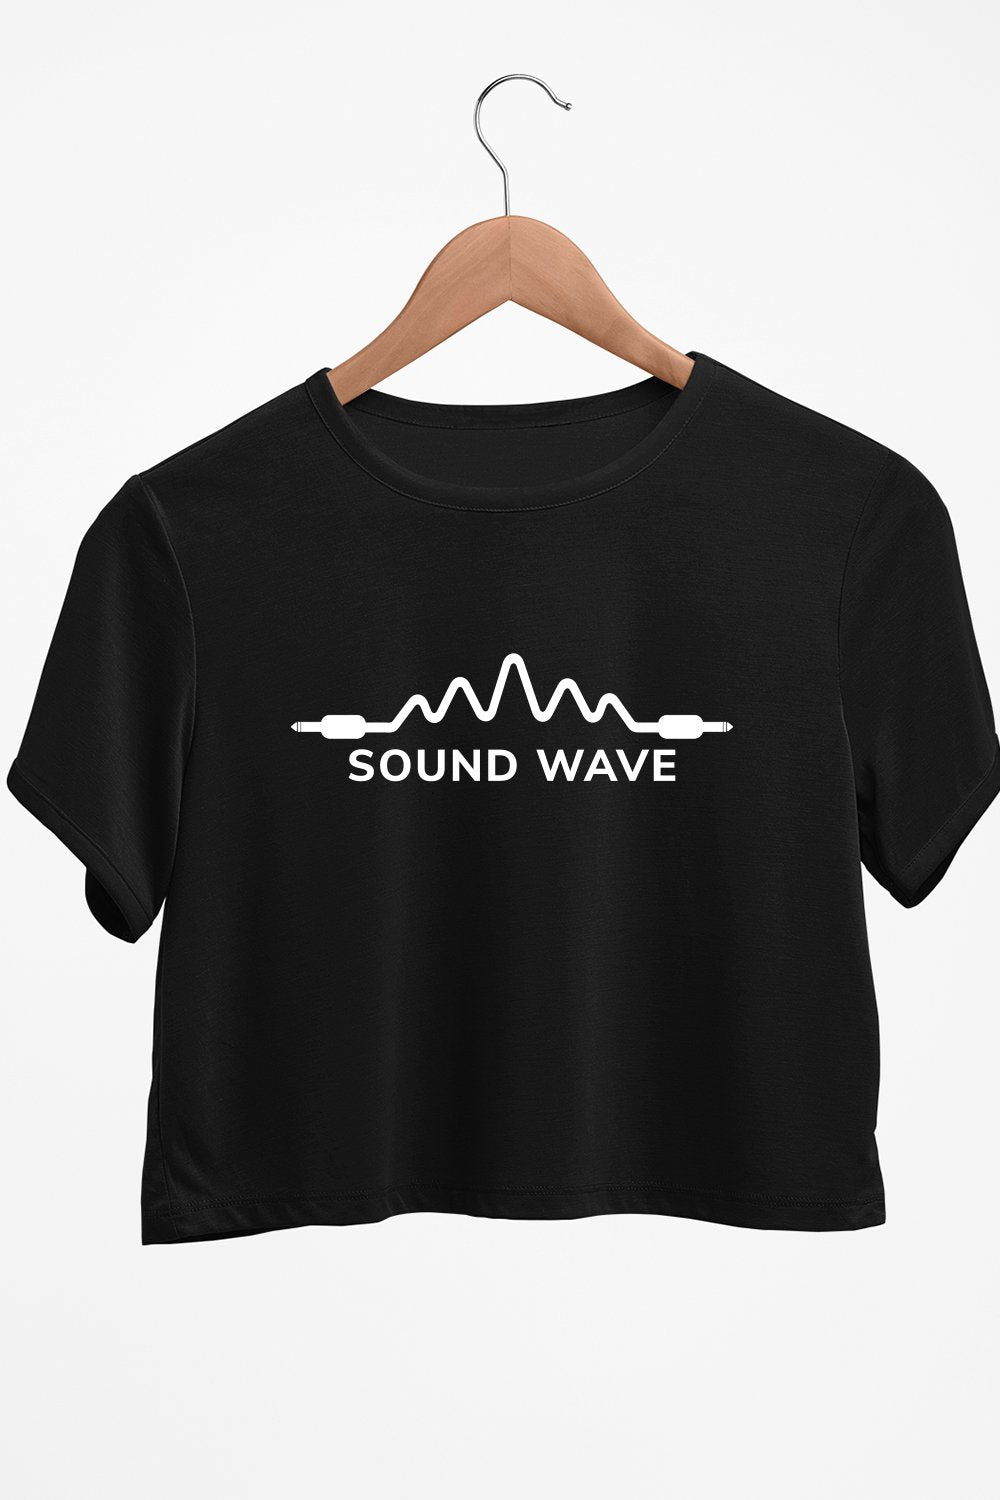 Sound Wave Graphic Printed Black Crop Top